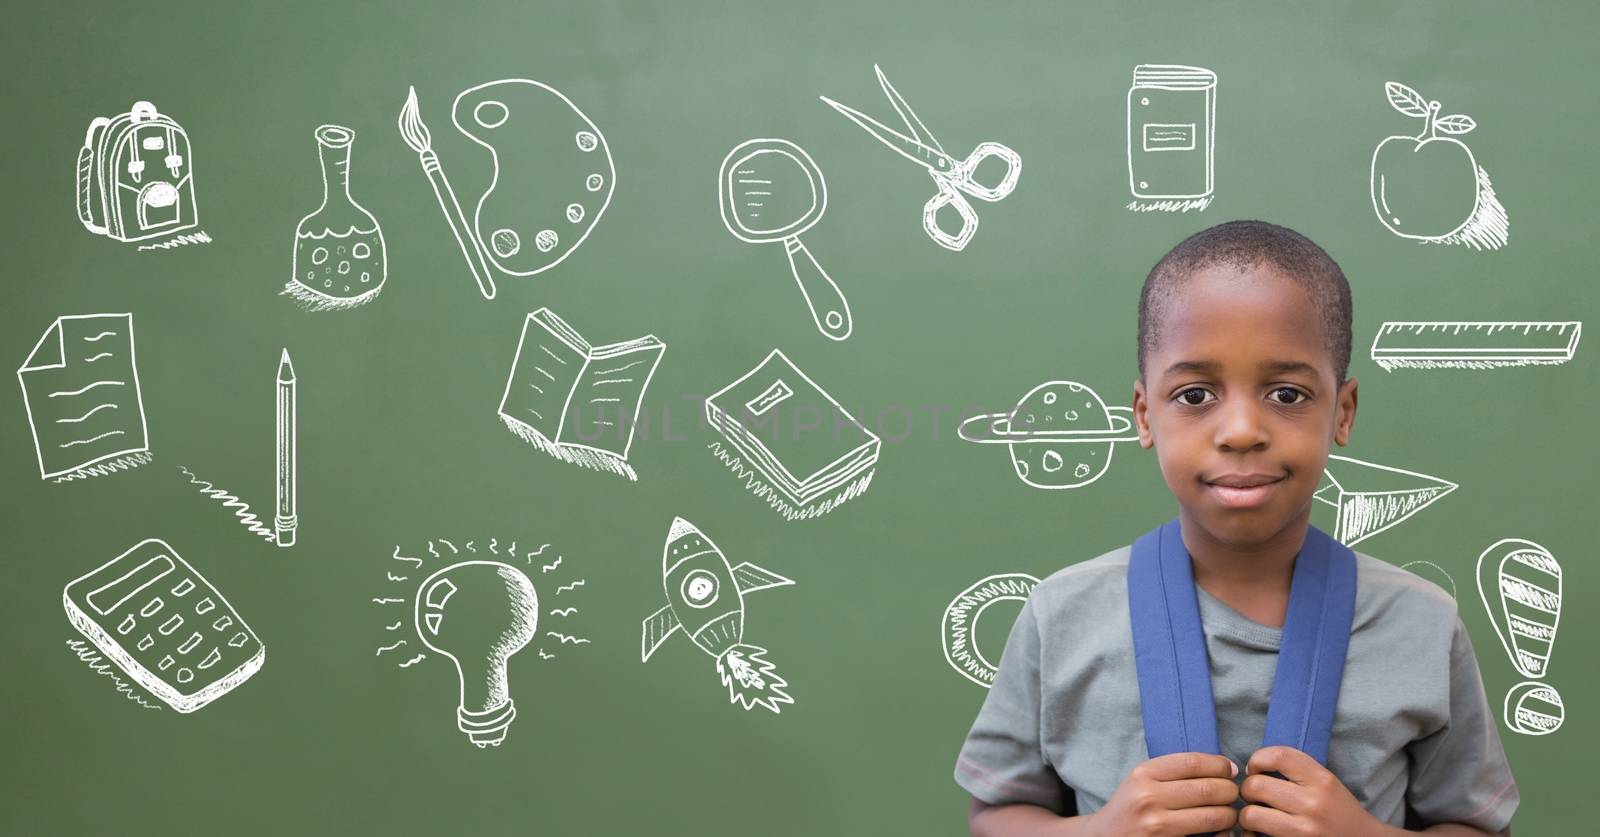 School boy and Education drawing on blackboard for school by Wavebreakmedia